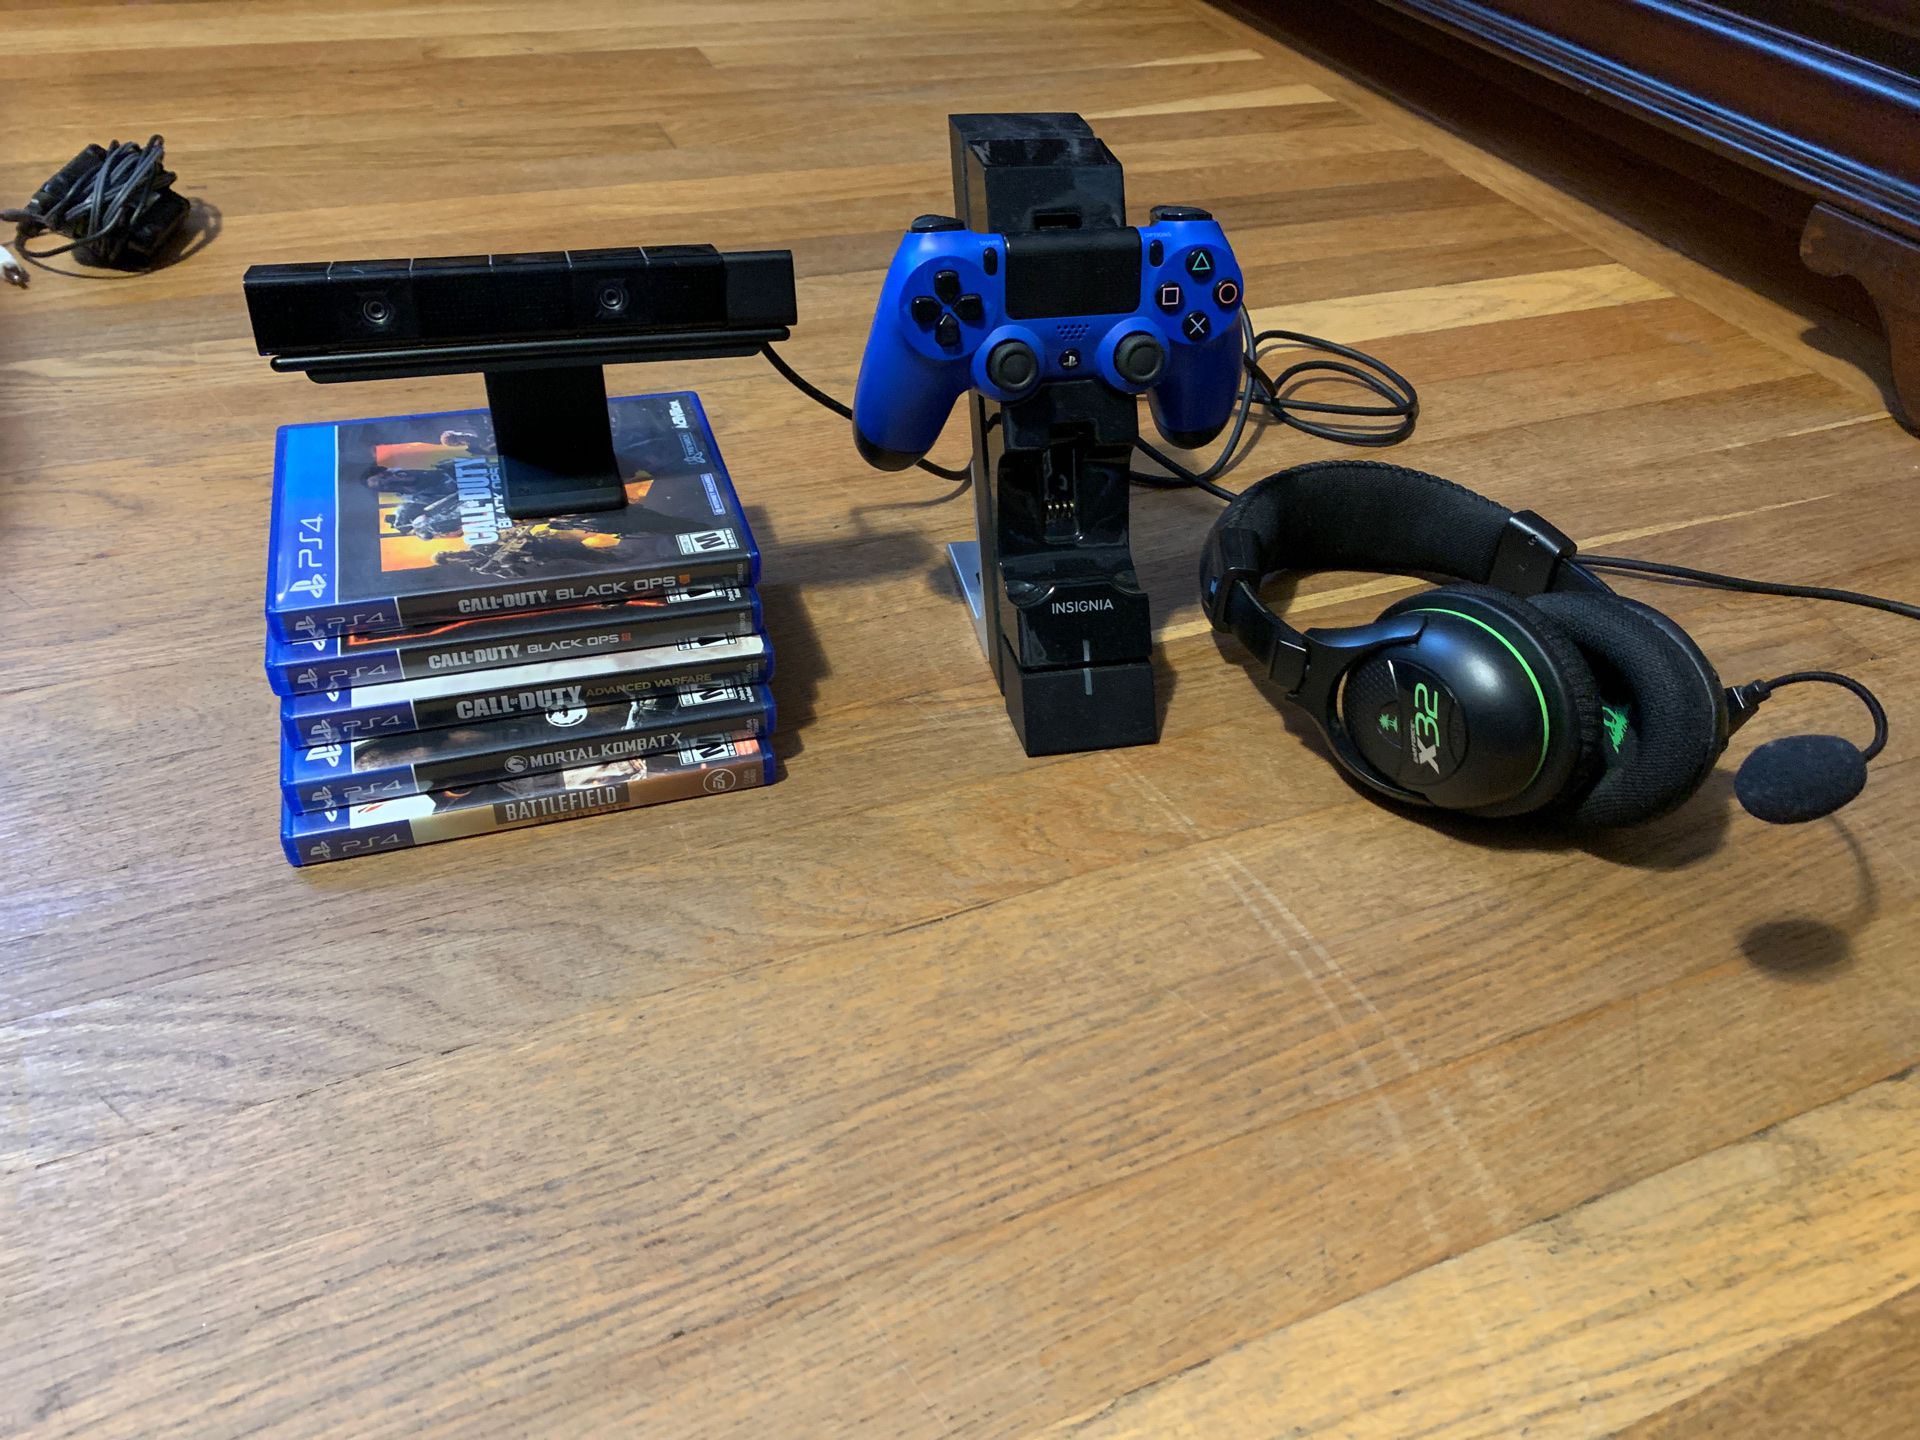 5 PS4 games /1 blue remote control /1 camera/Xbox headphones EAR FORCE X32